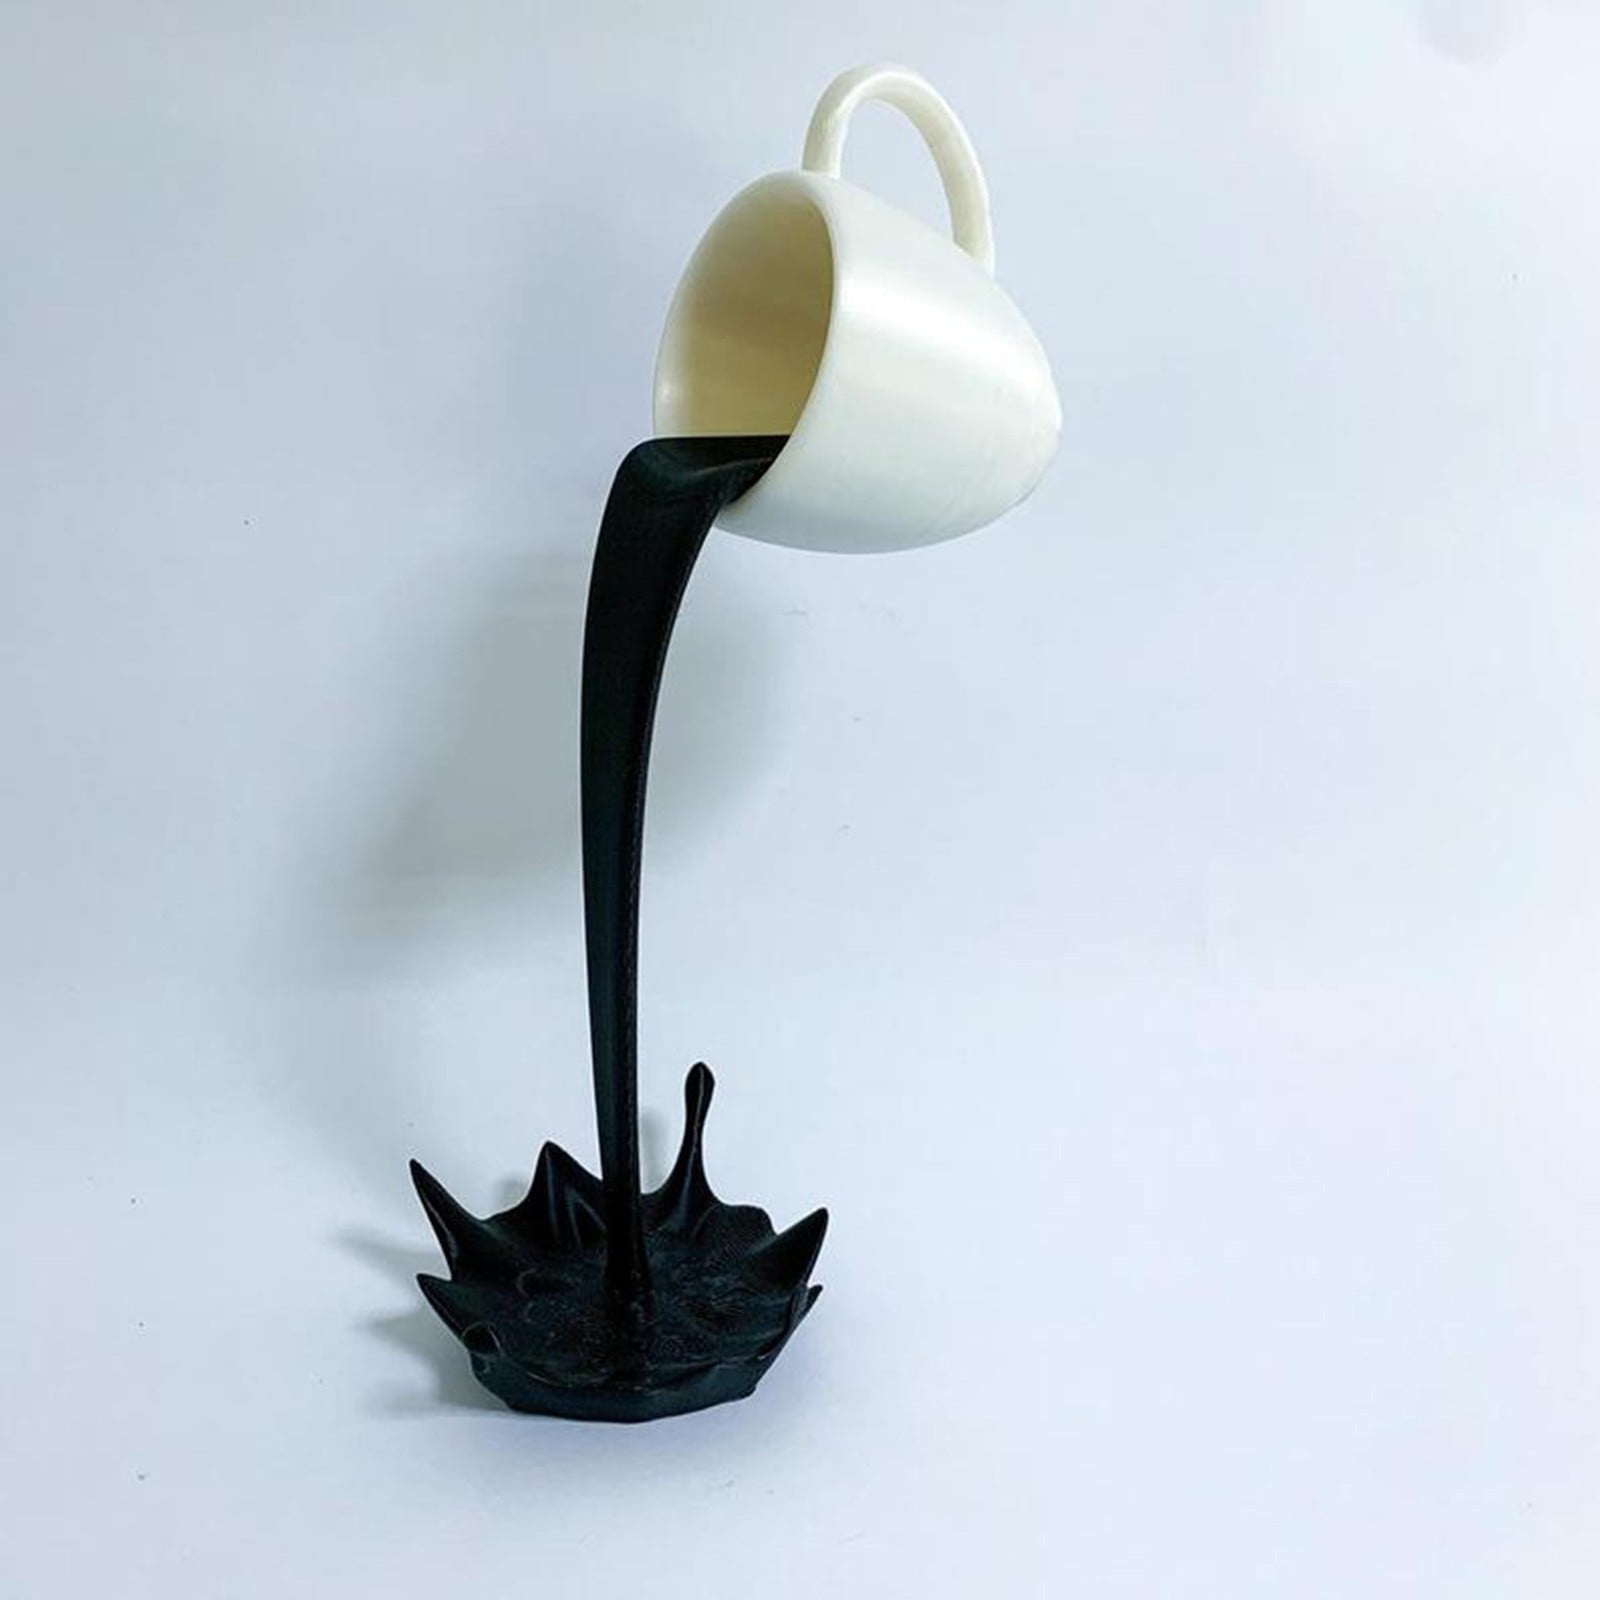 Jetec Floating Coffee Cup Mug Sculpture Mini Spilling Pouring Coffee Cup  Sculpture Accessories Funny…See more Jetec Floating Coffee Cup Mug  Sculpture